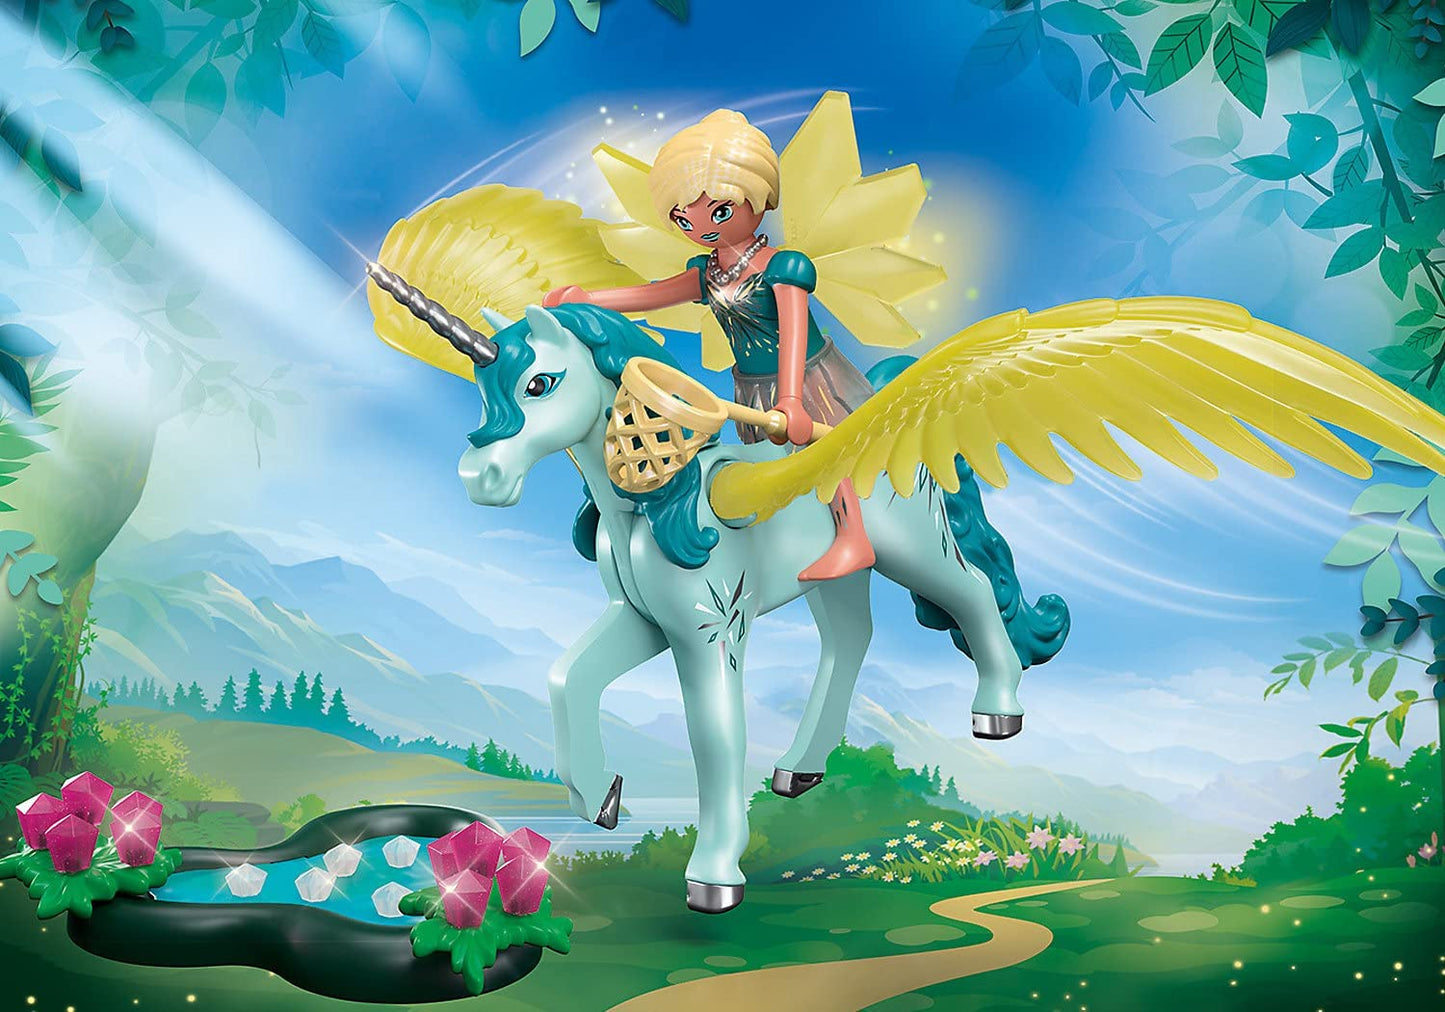 Playmobil - Crystal Fairy With Unicorn